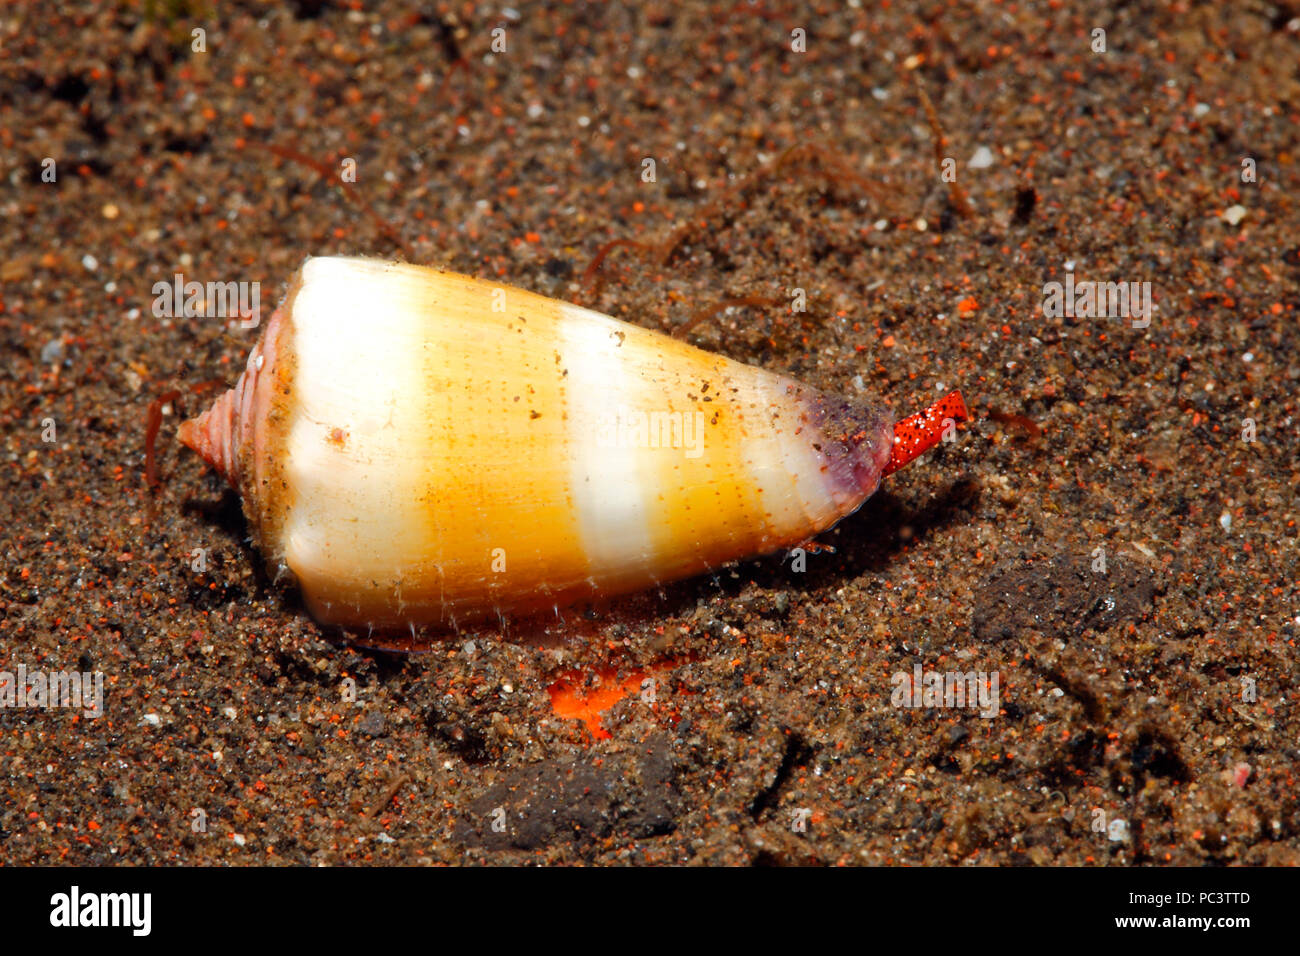 Muricate Cone Shell, Conus muriculatus. Alive underwater, showing syphon and eye.Tulamben, Bali, Indonesia. Bali Sea, Indian Ocean Stock Photo